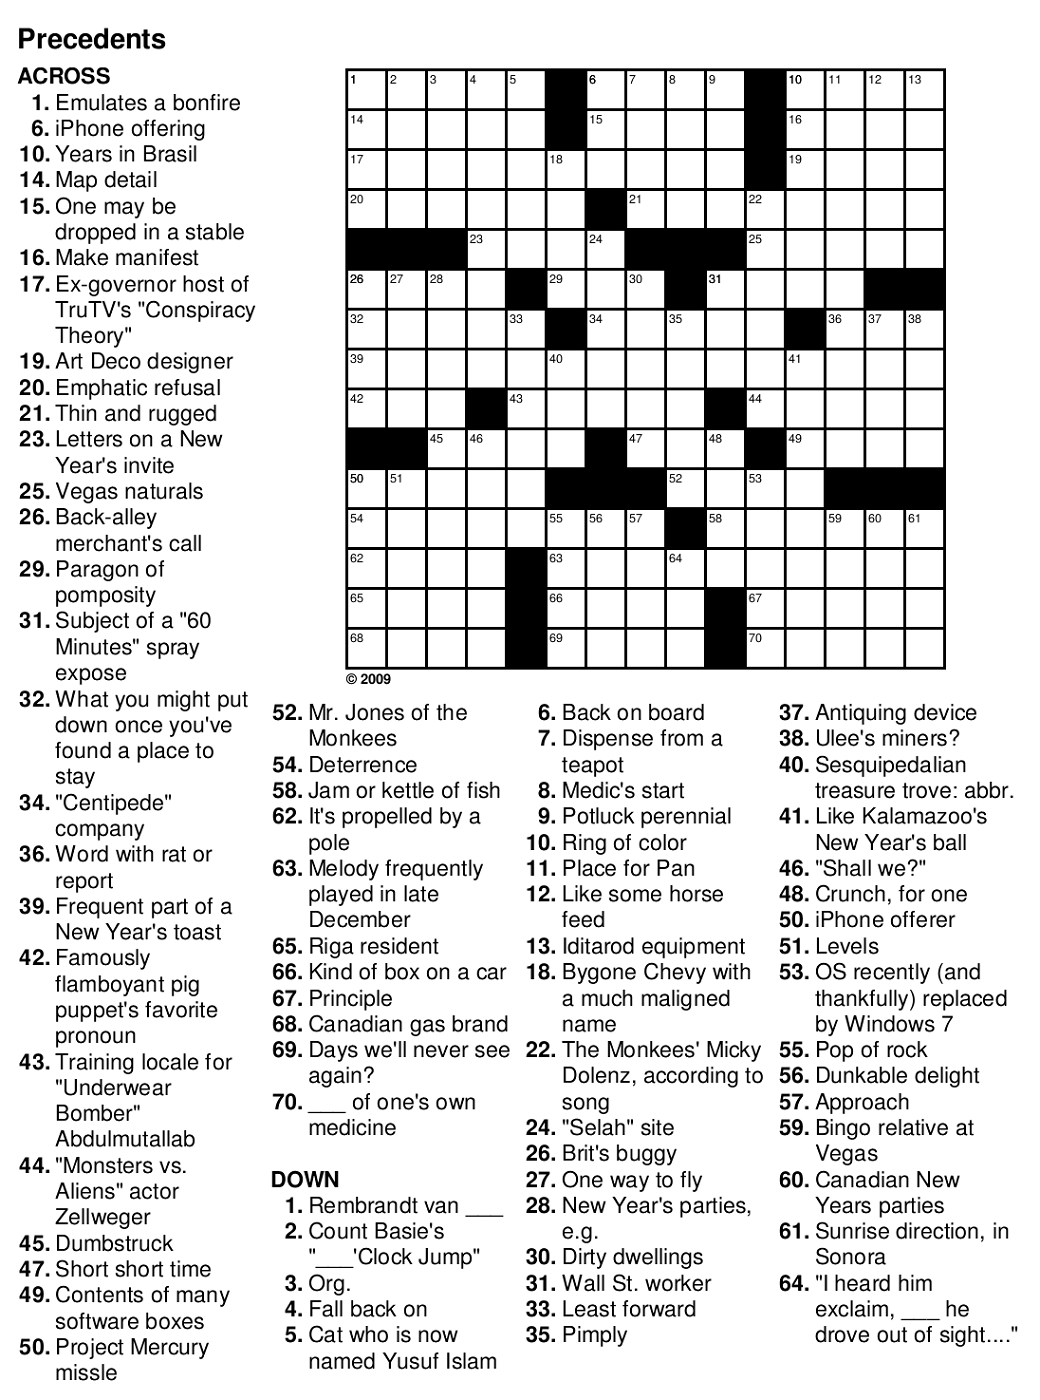 crosswords for beginners